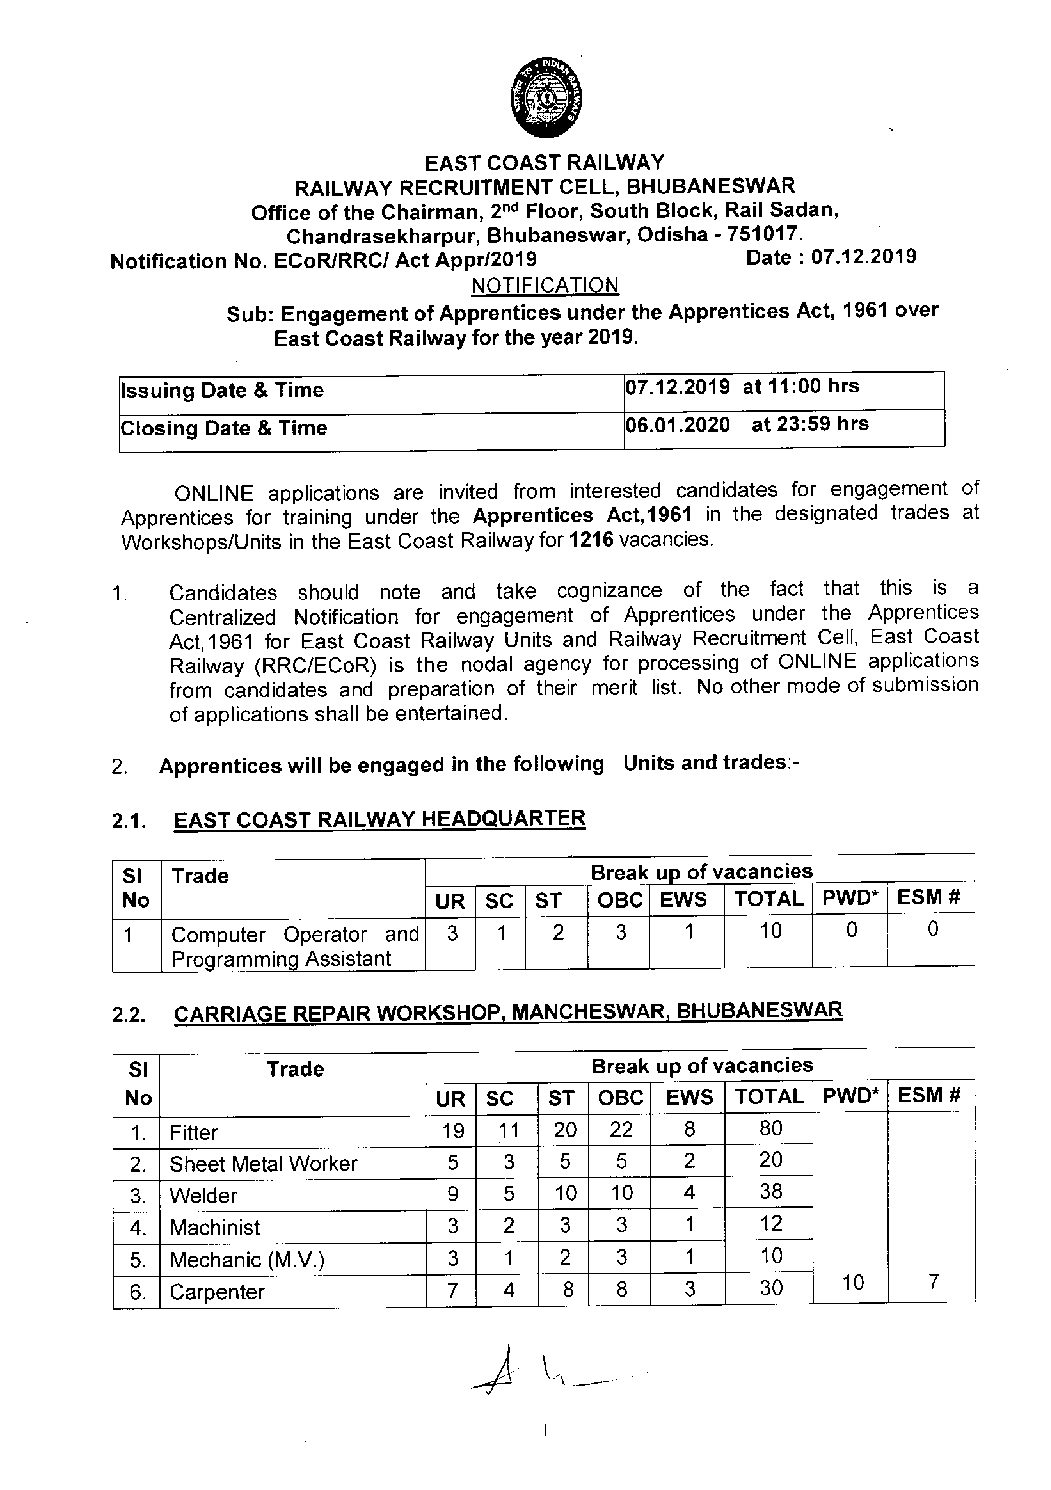 East Coast Railway Recruitment 2019-20, Apply for 1216 Apprentice vacancies